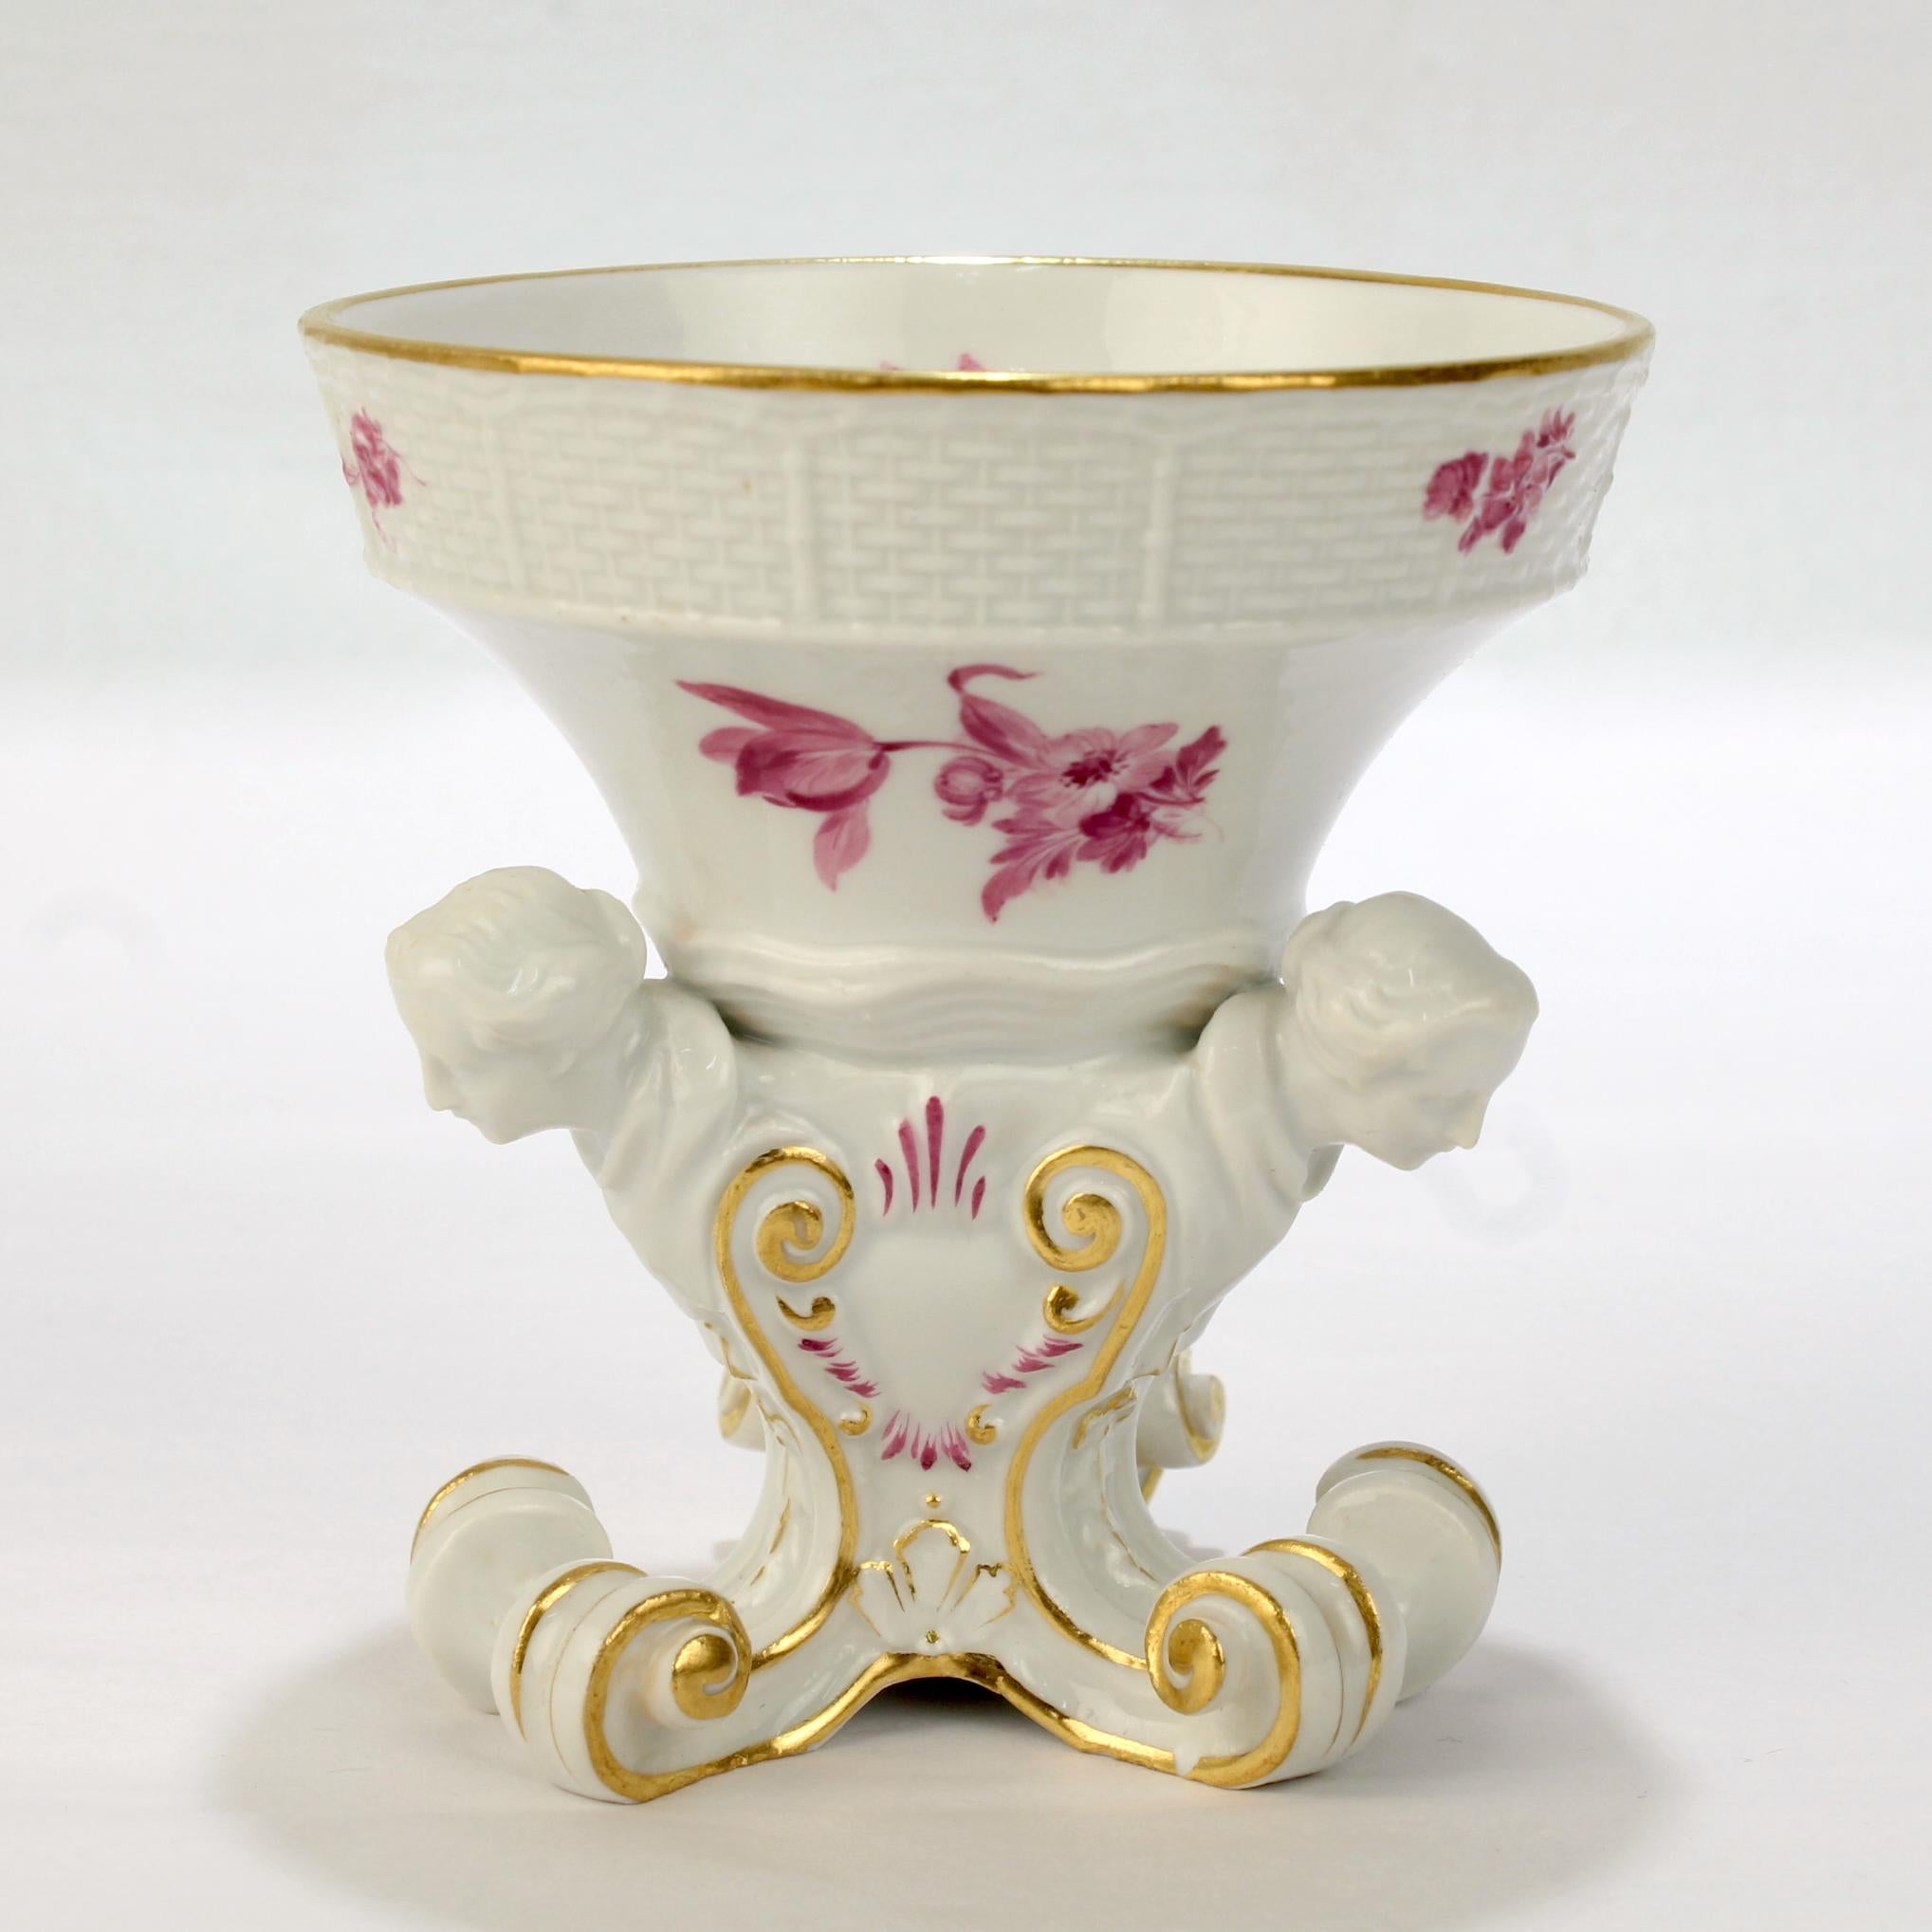 4 Antique Meissen Porcelain Footed Frauenkopf Salt Cellars with Puce Flowers For Sale 6